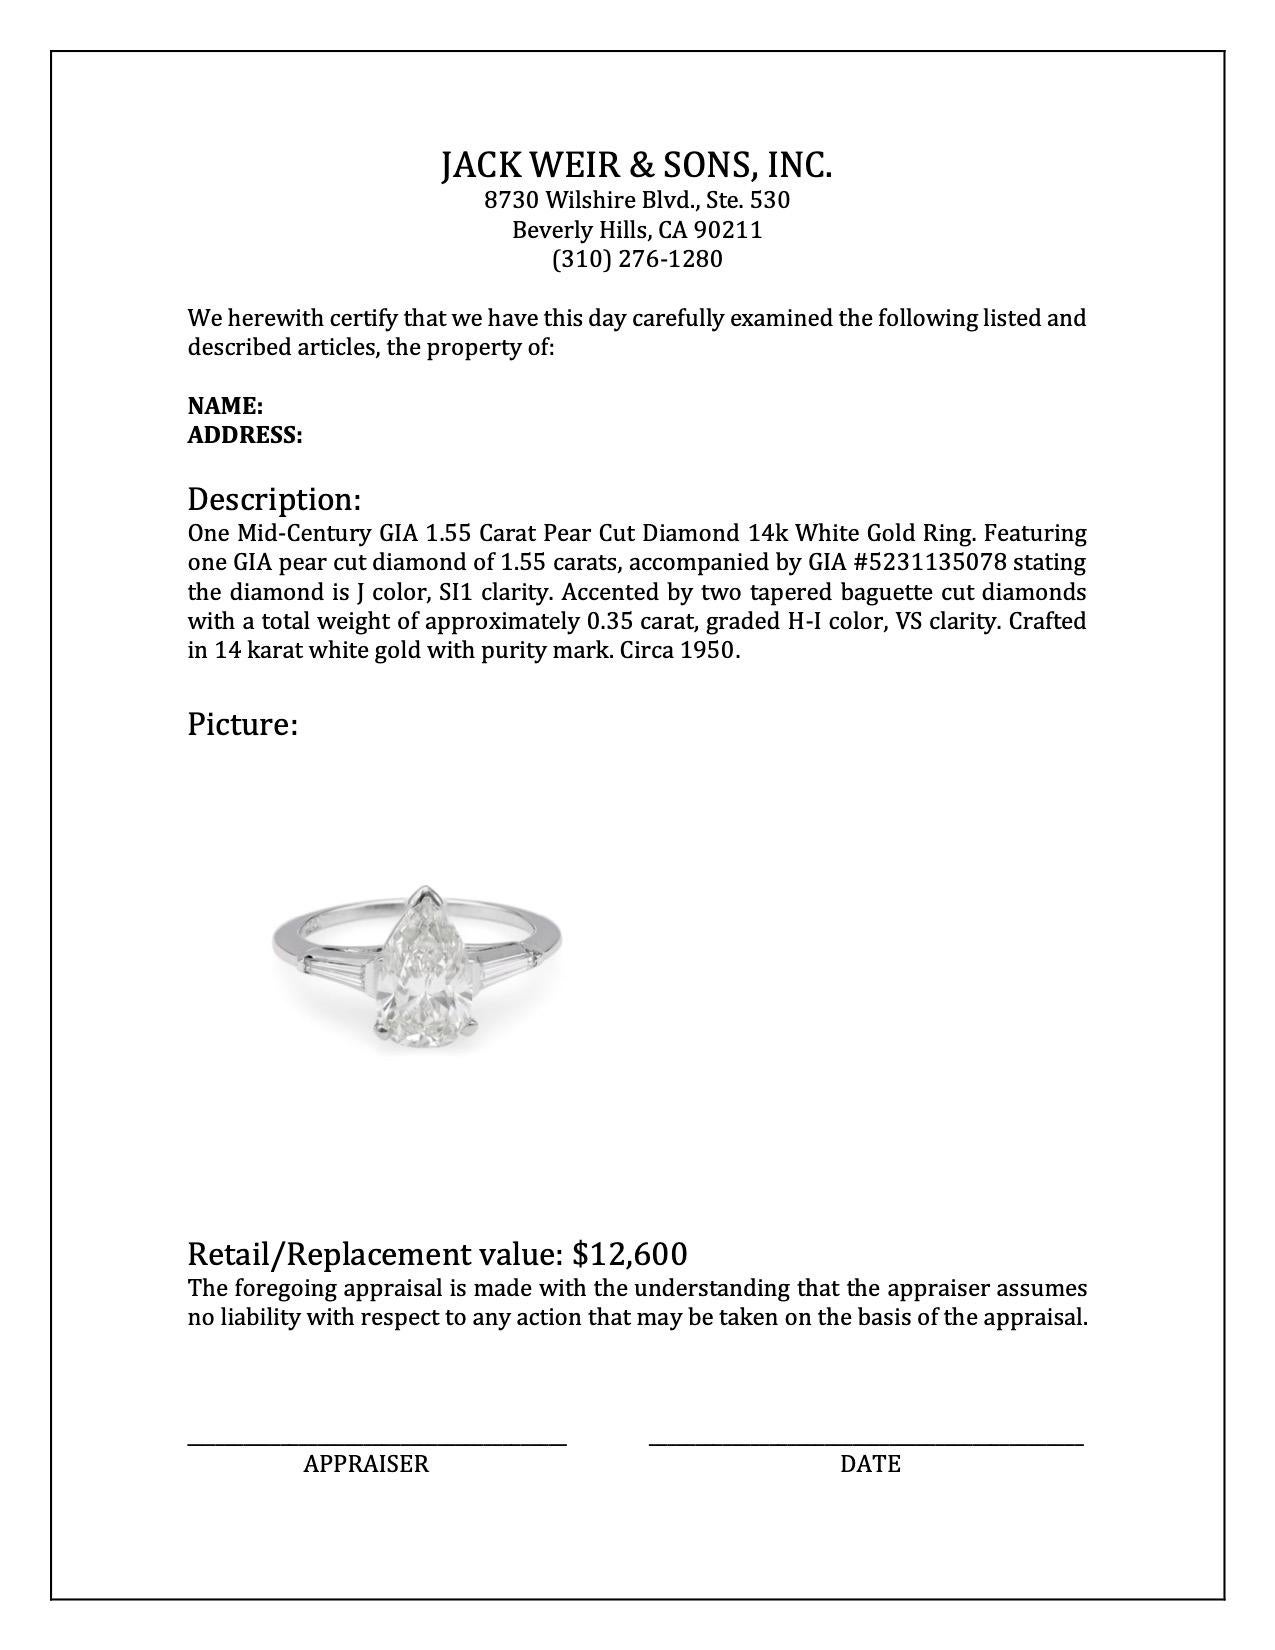 Mid-Century GIA 1.55 Carat Pear Cut Diamond 14k White Gold Ring For Sale 3